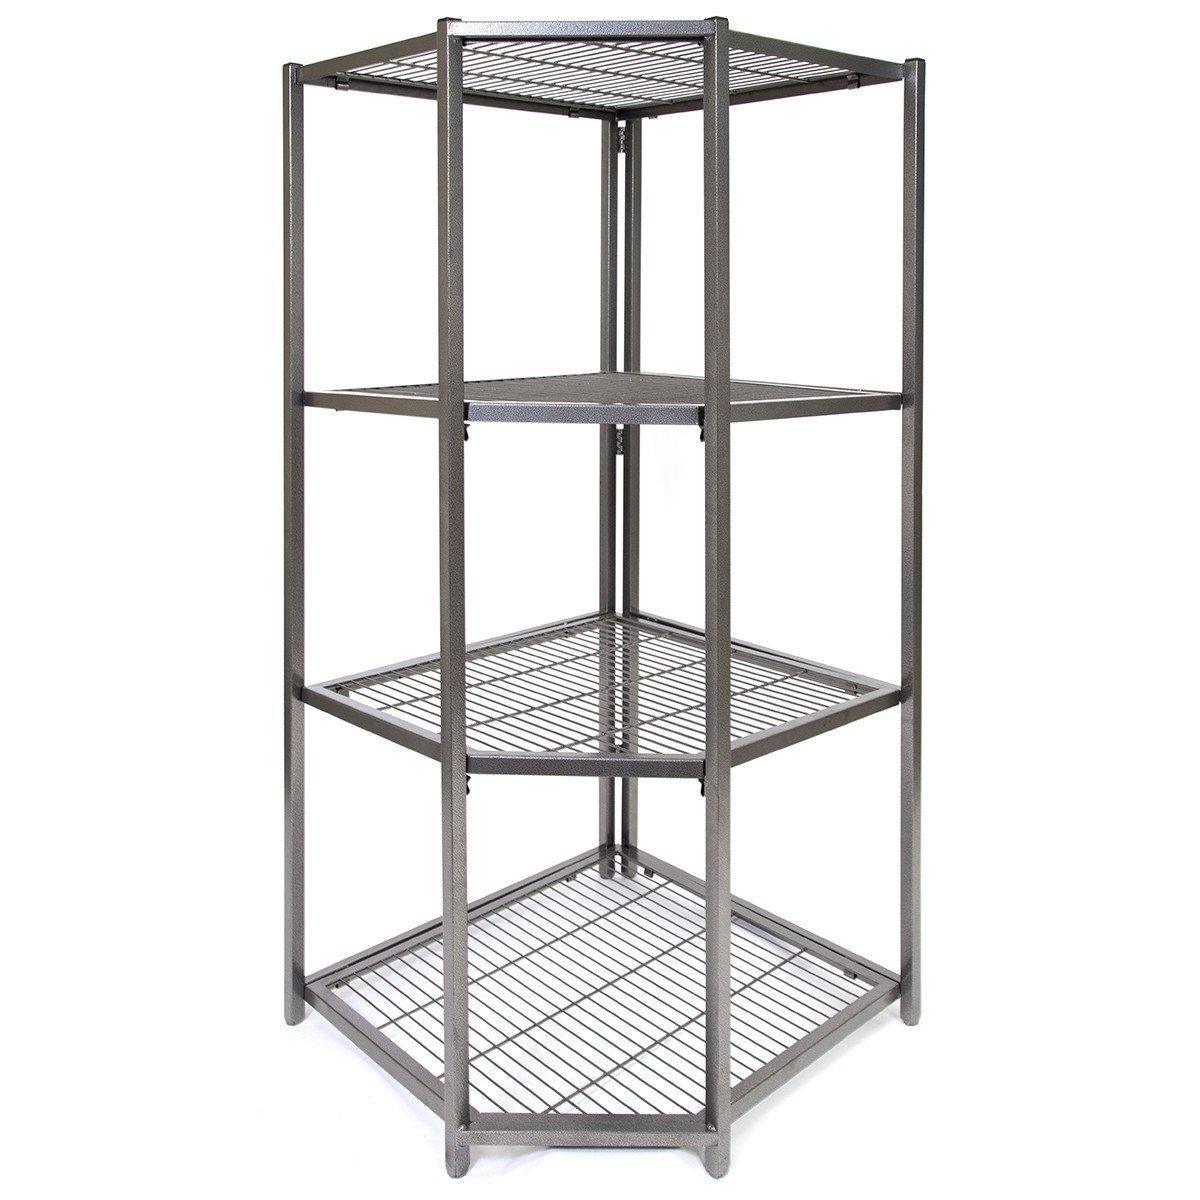 R5 Series: 4-Shelf Large Corner Rack